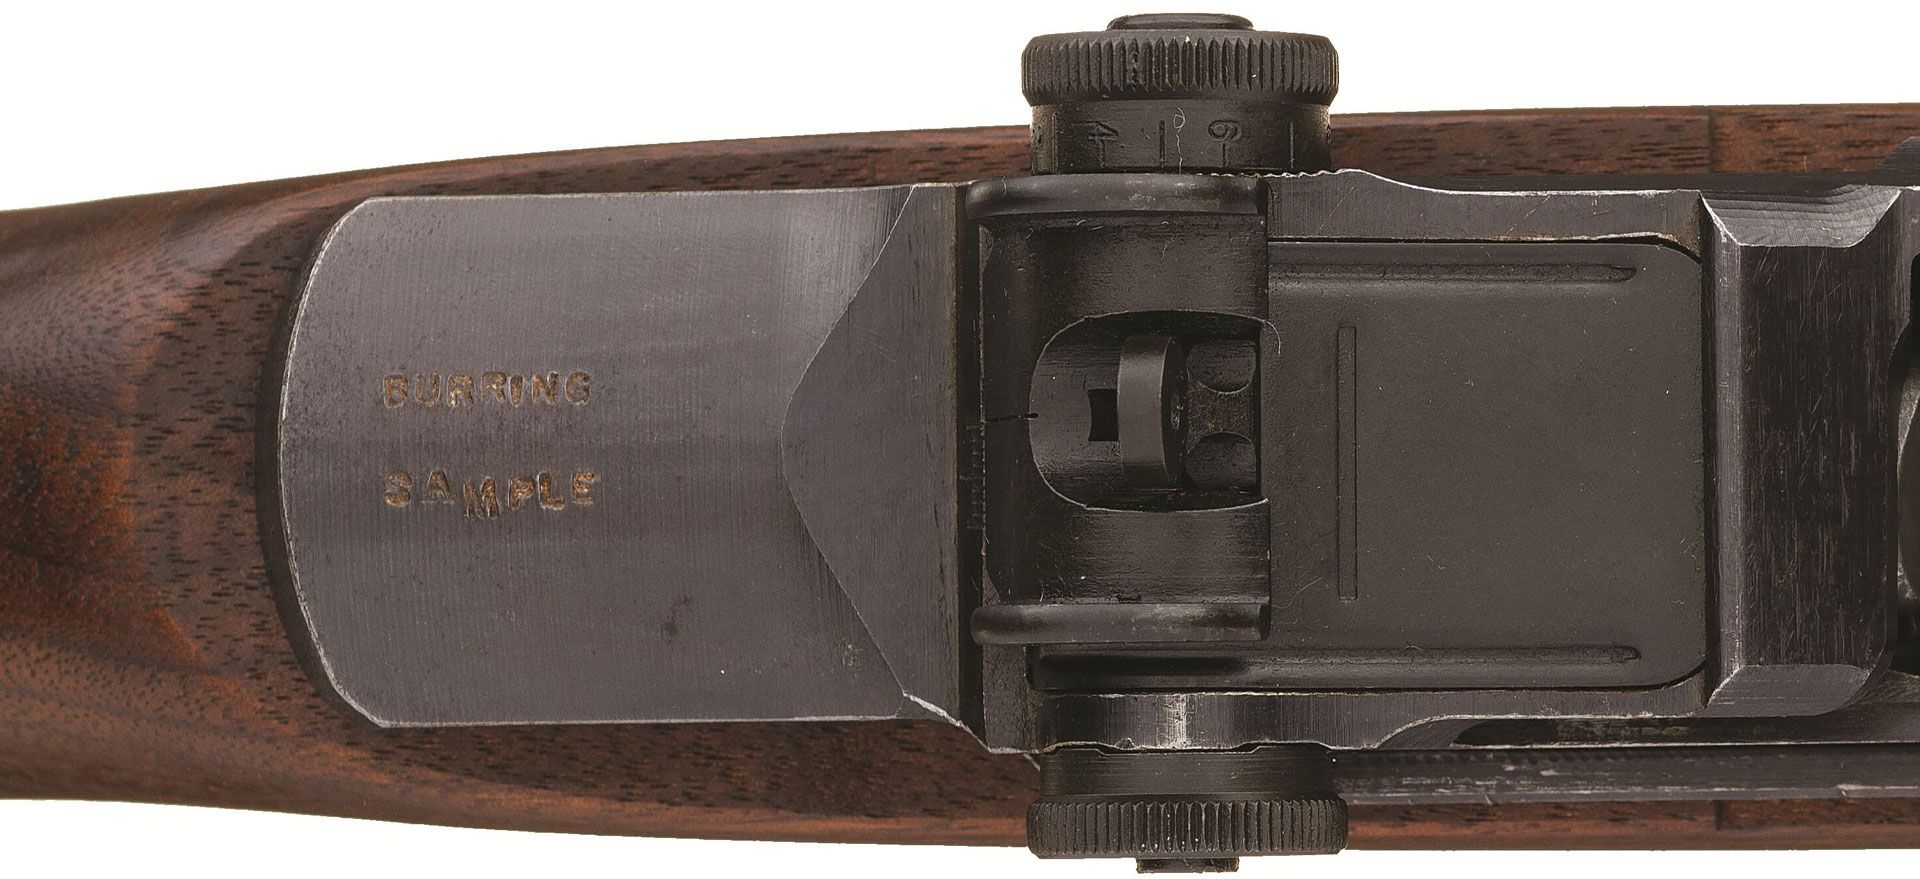 Harrington Richardson BURRING-SAMPLE M1 Garand Rifle